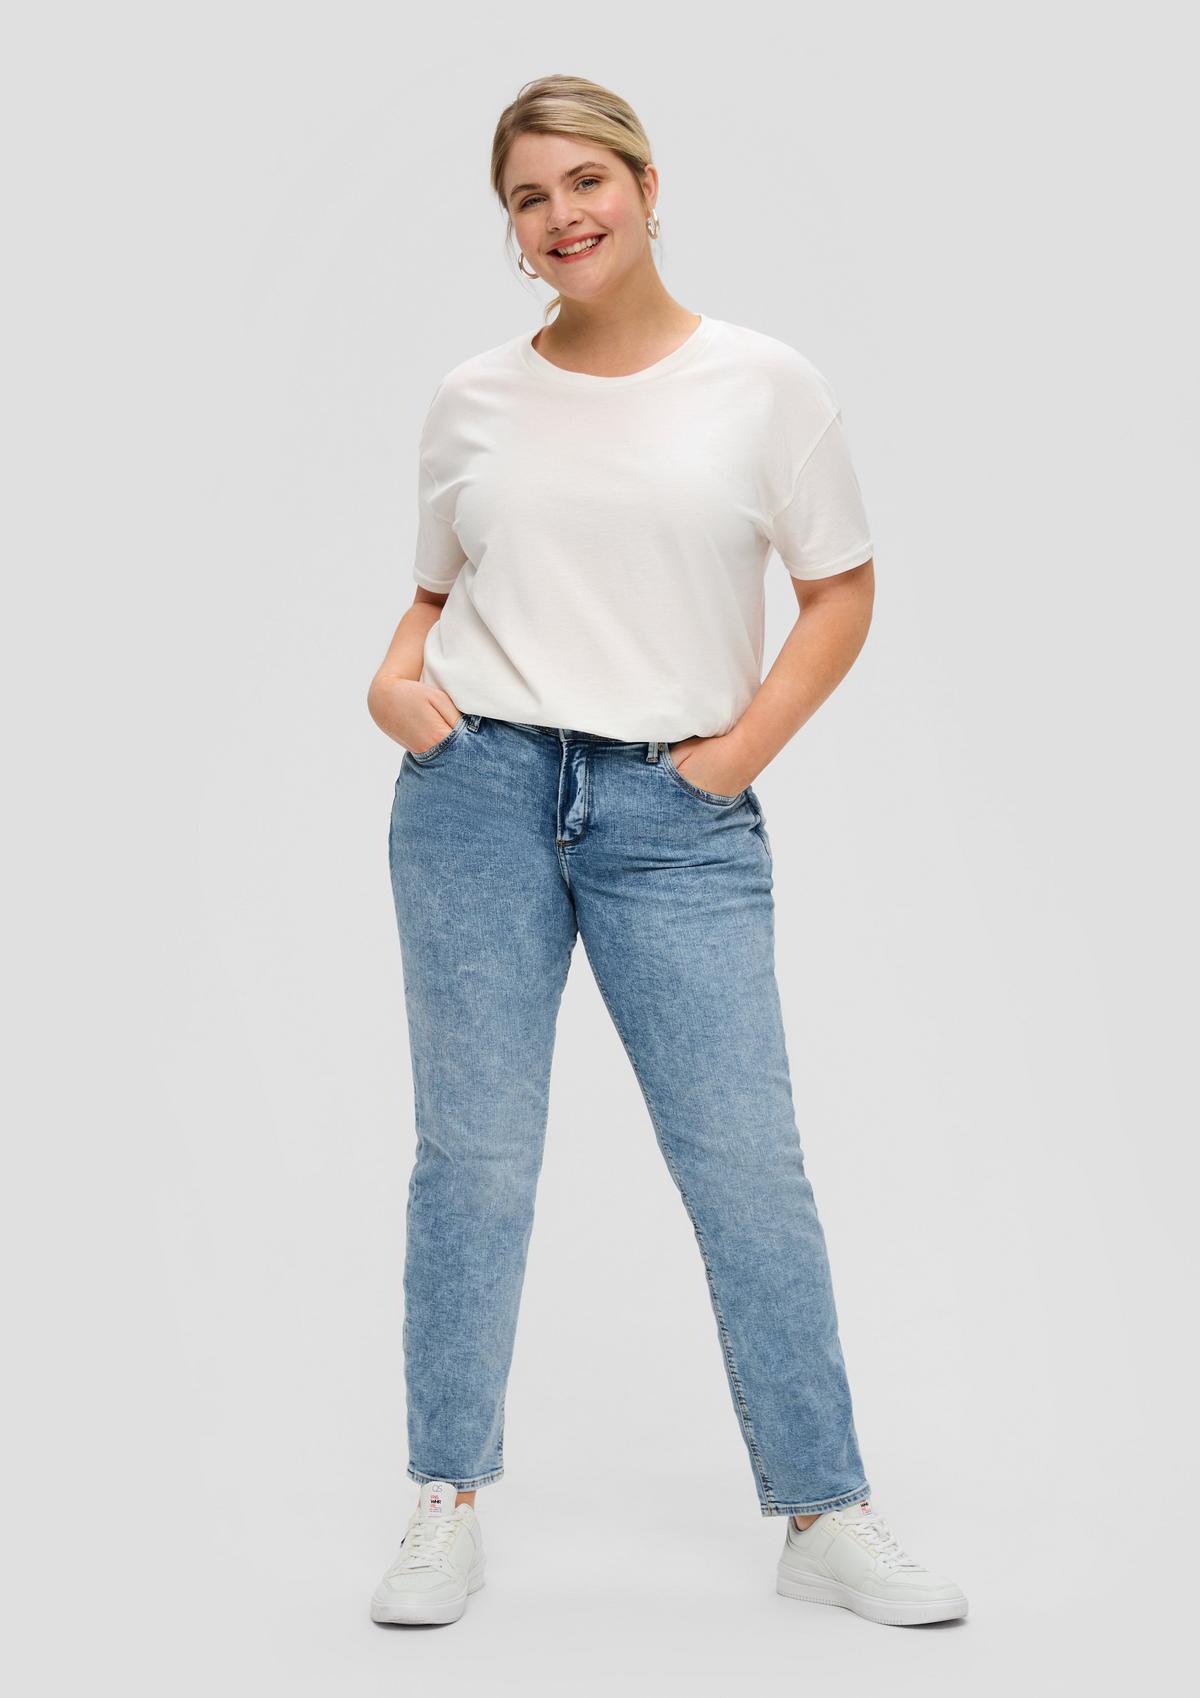 Jeans hlače/kroj Mid Rise/ozke hlačnice